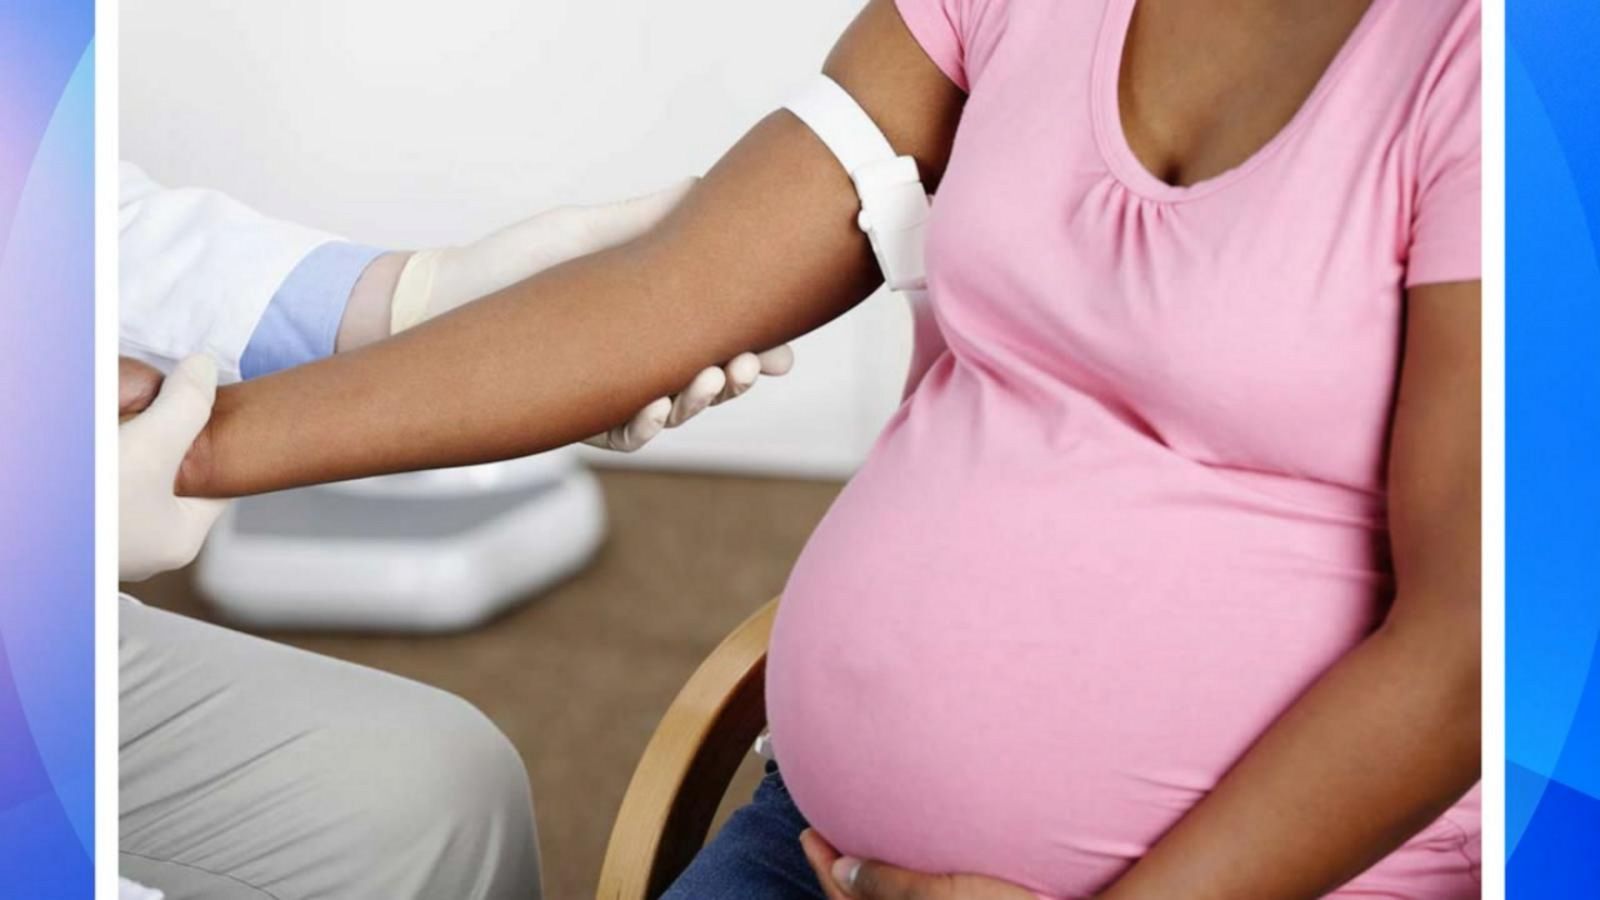 Fda Warns About Some Non Invasive Prenatal Screening Tests Good Morning America